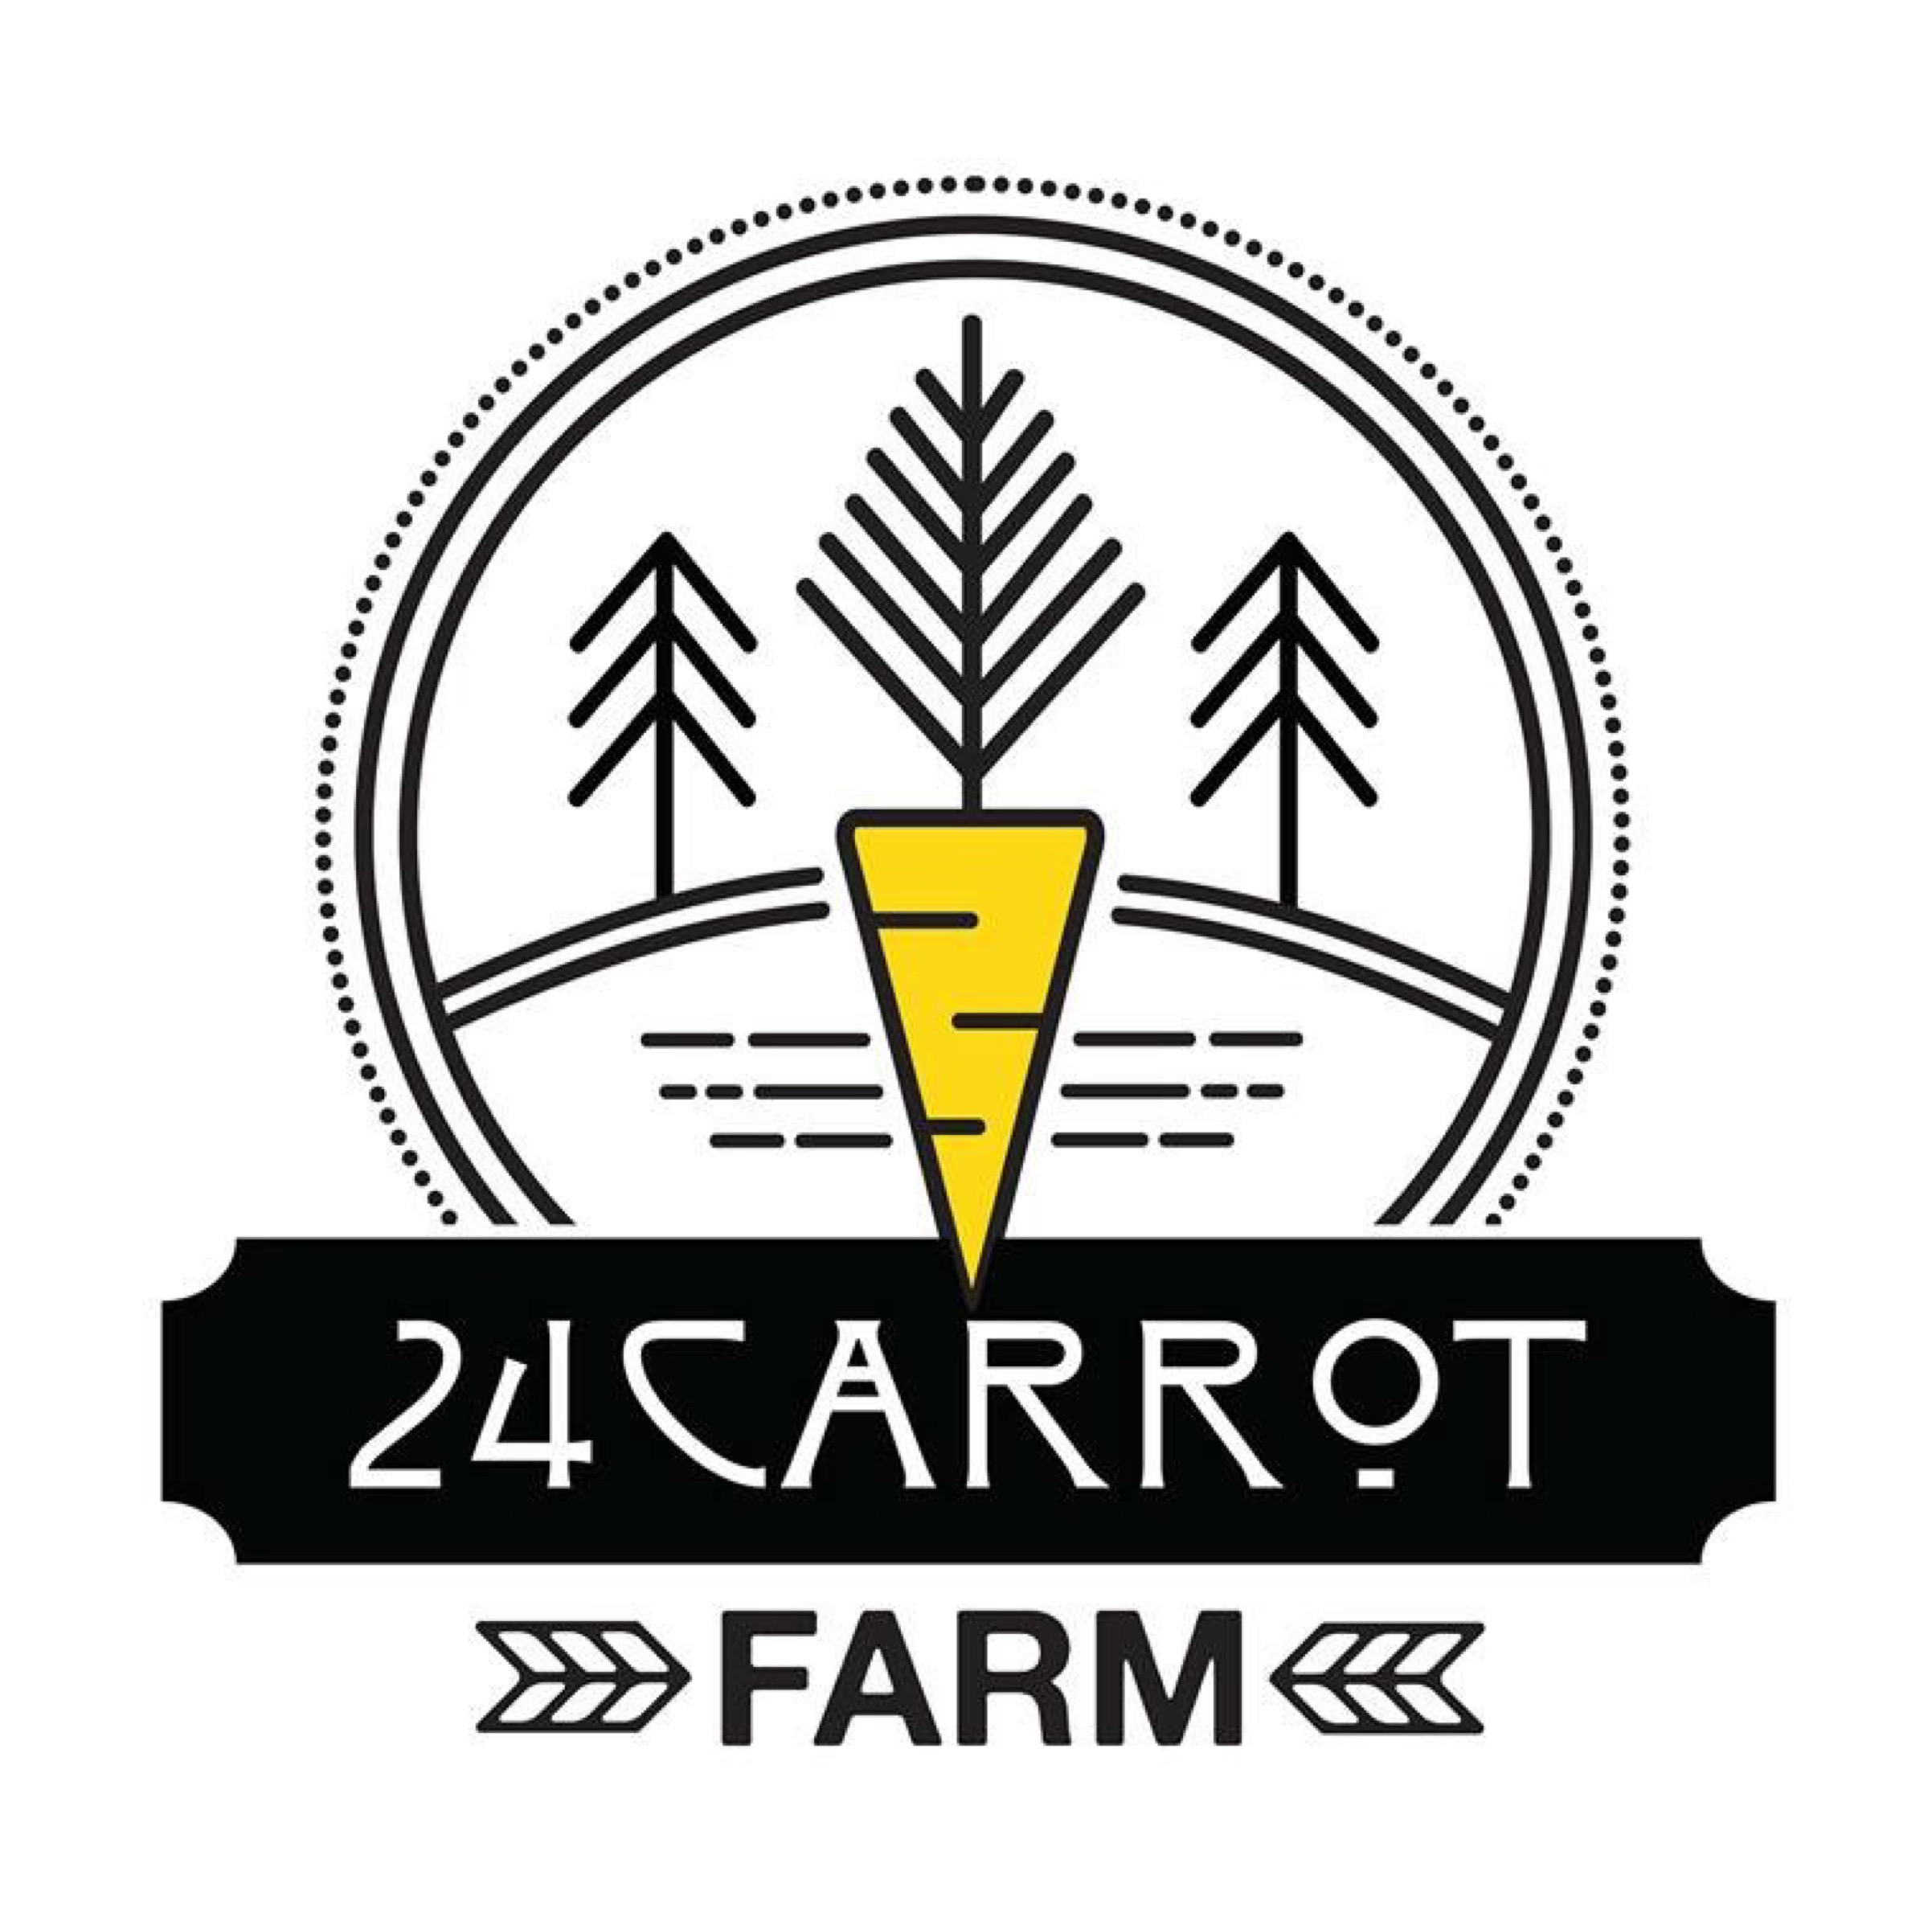 24Carrot Farm